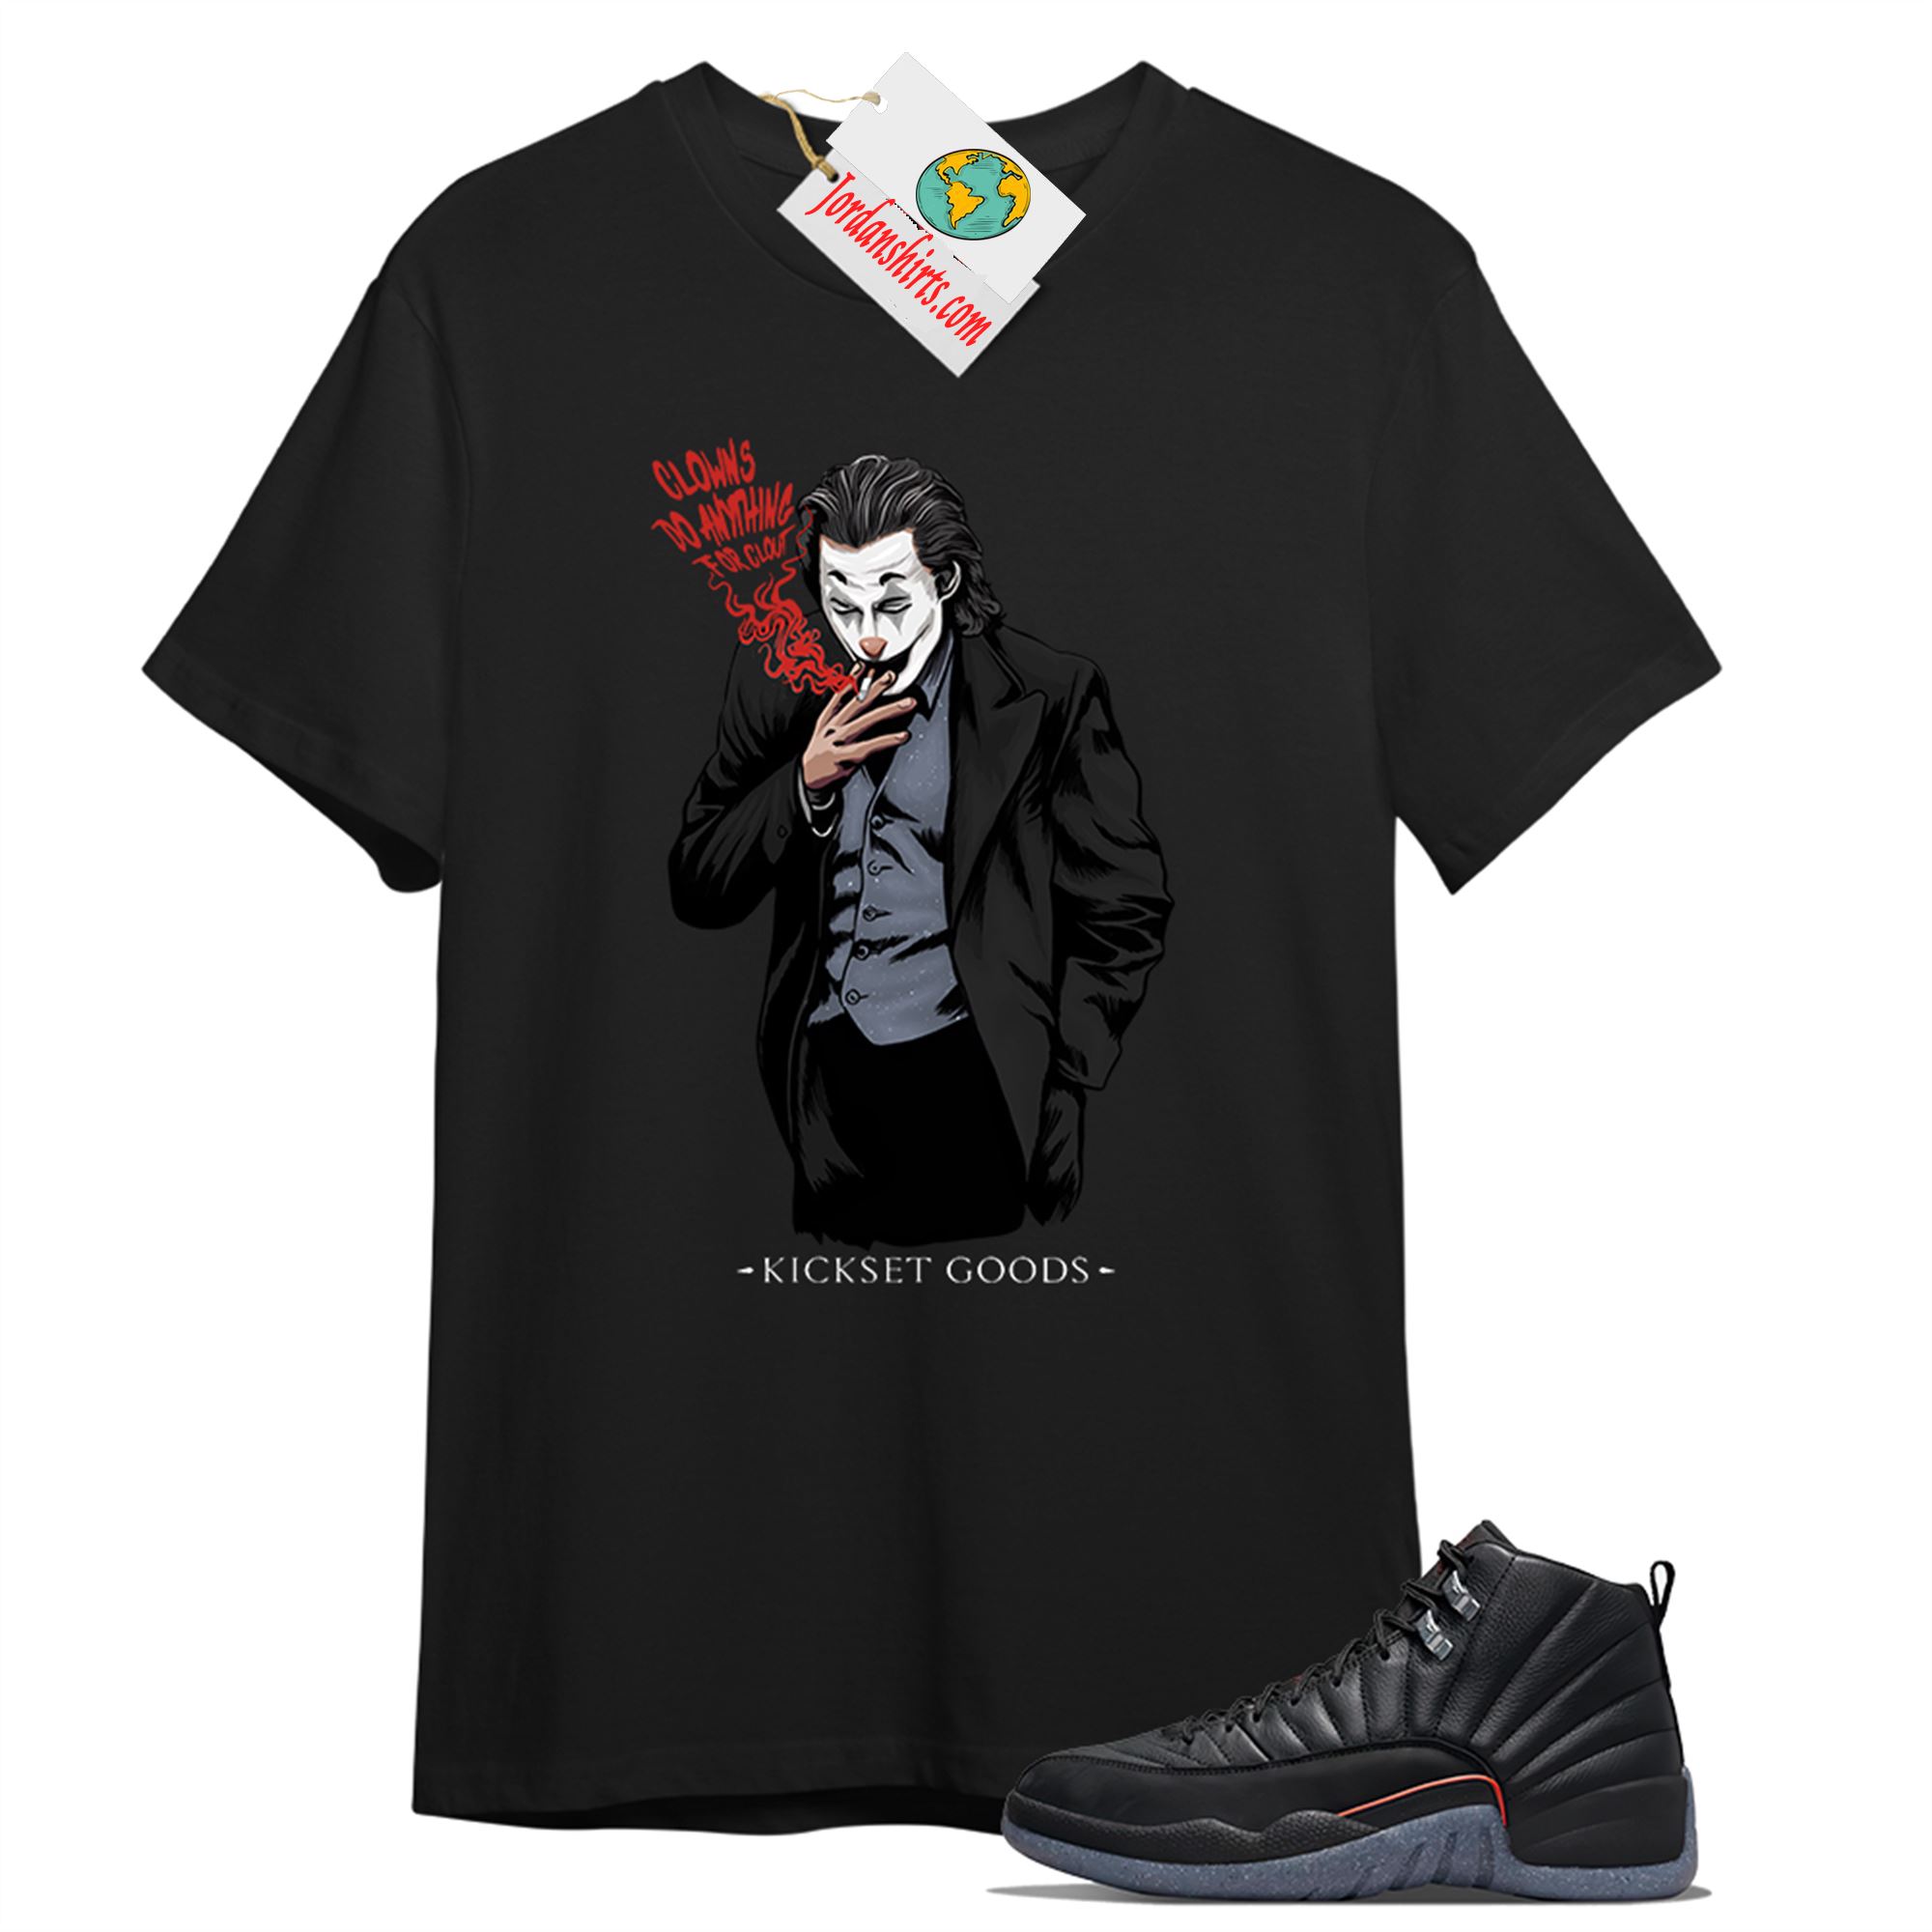 Jordan 12 Shirt, Joker Black T-shirt Air Jordan 12 Utility Grind 12s Size Up To 5xl